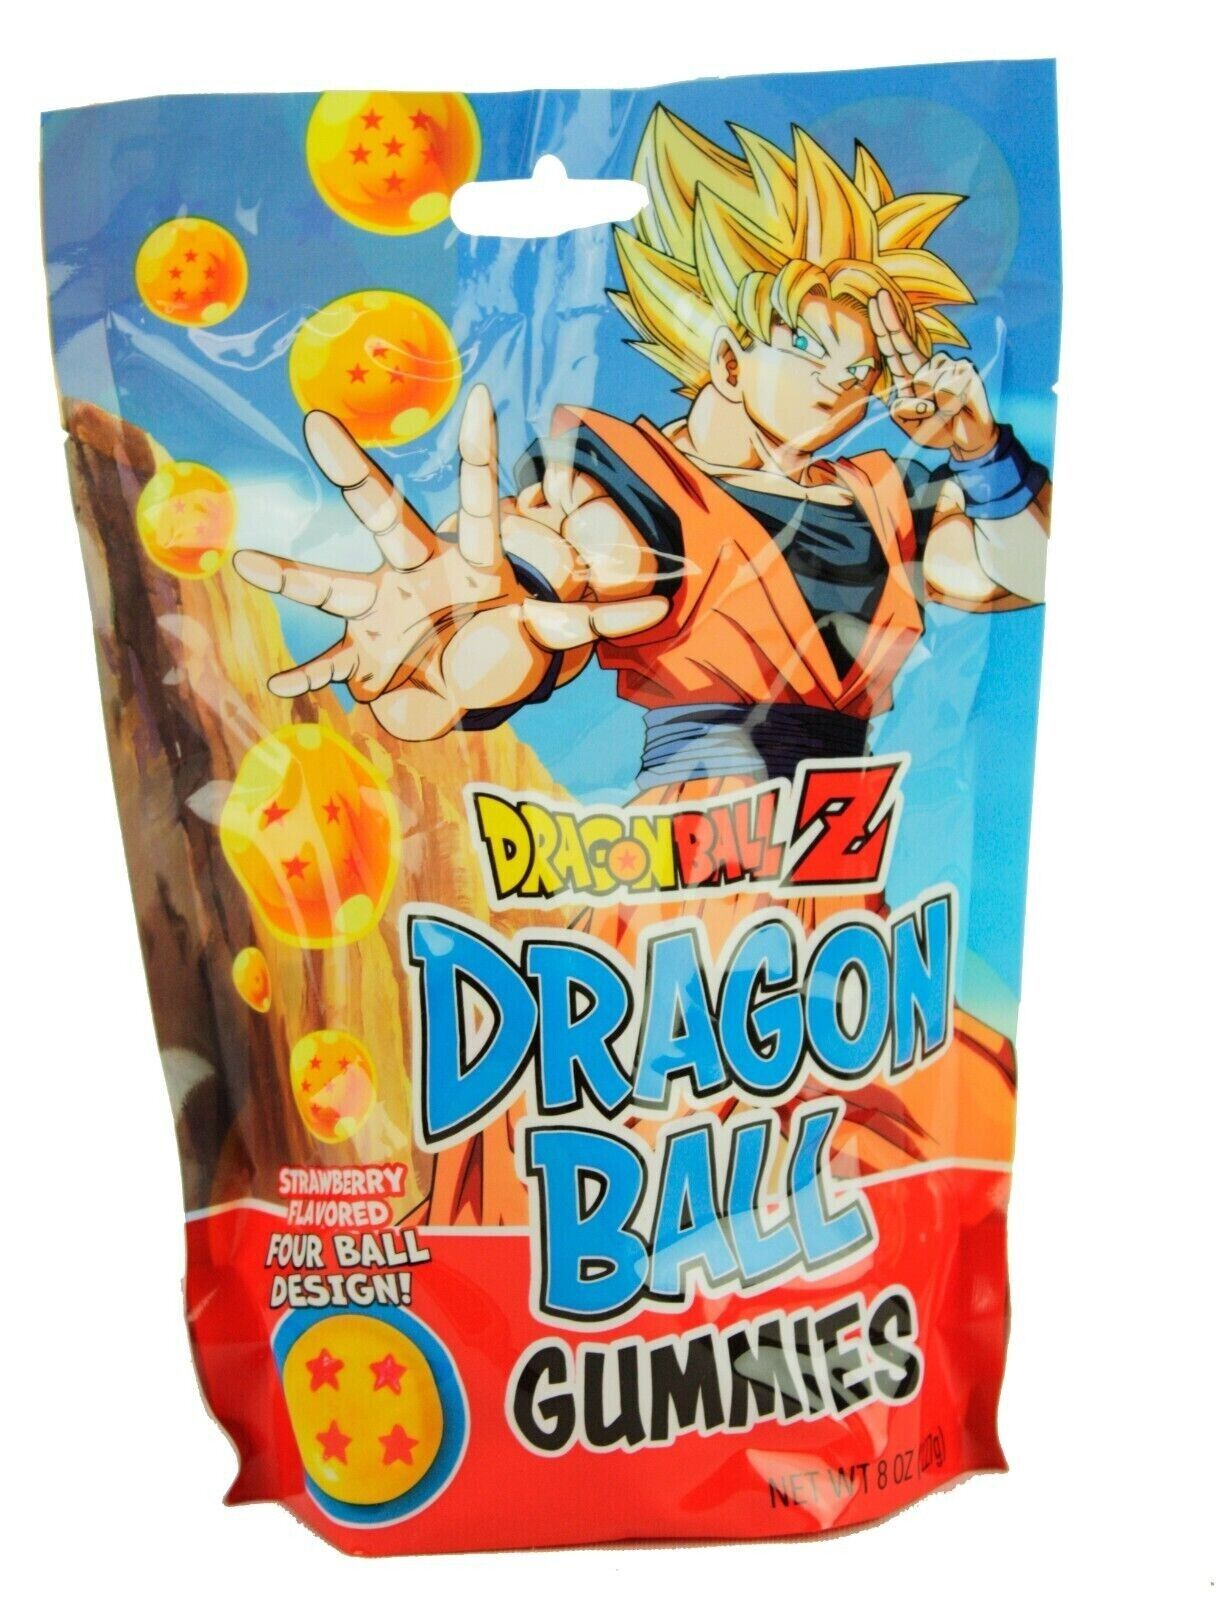 Dragonball Z DBZ Dragon Ball Gummies 4 Ball Design Strawberry Gummy Candy 8 Oz